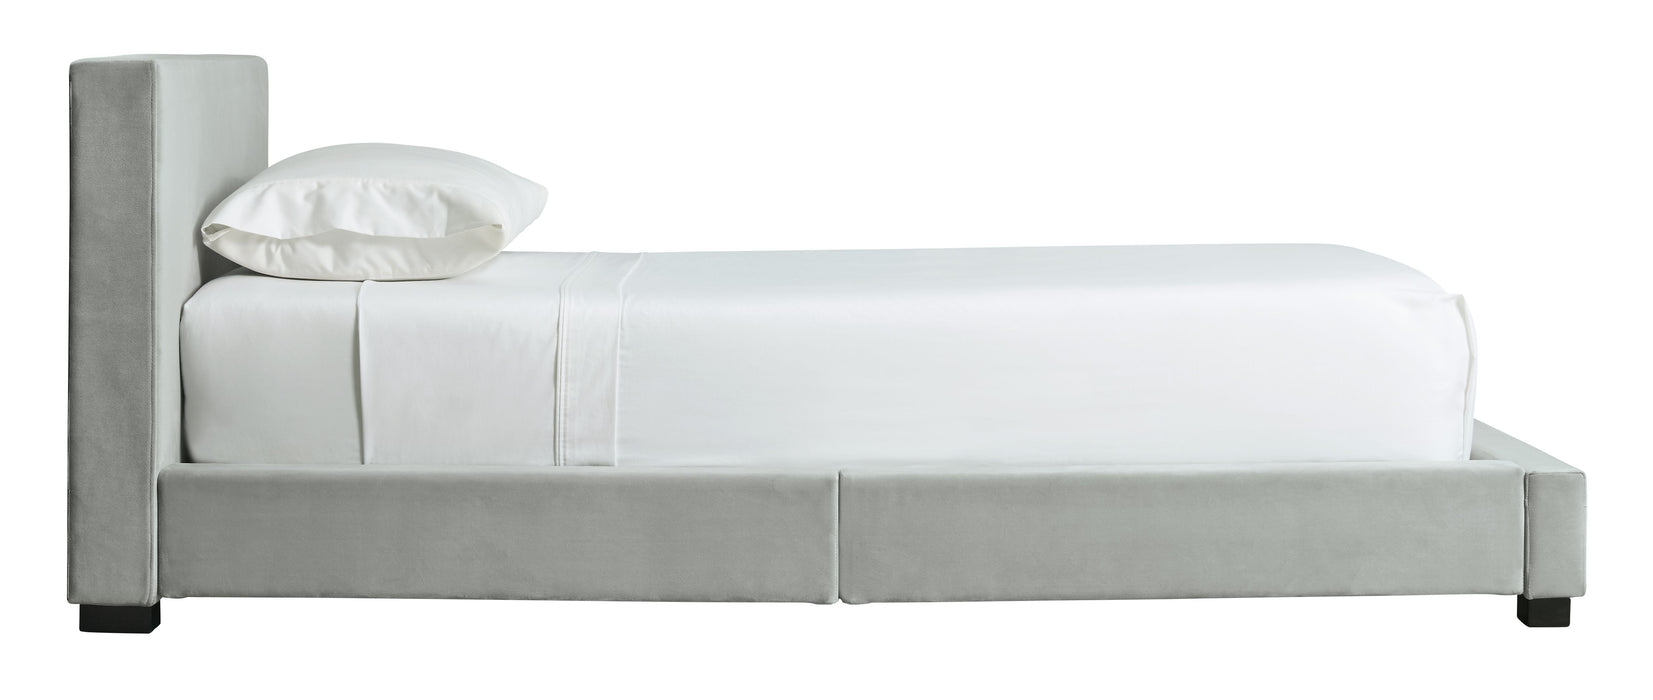 Chesani - Uph Bed W/roll Slats